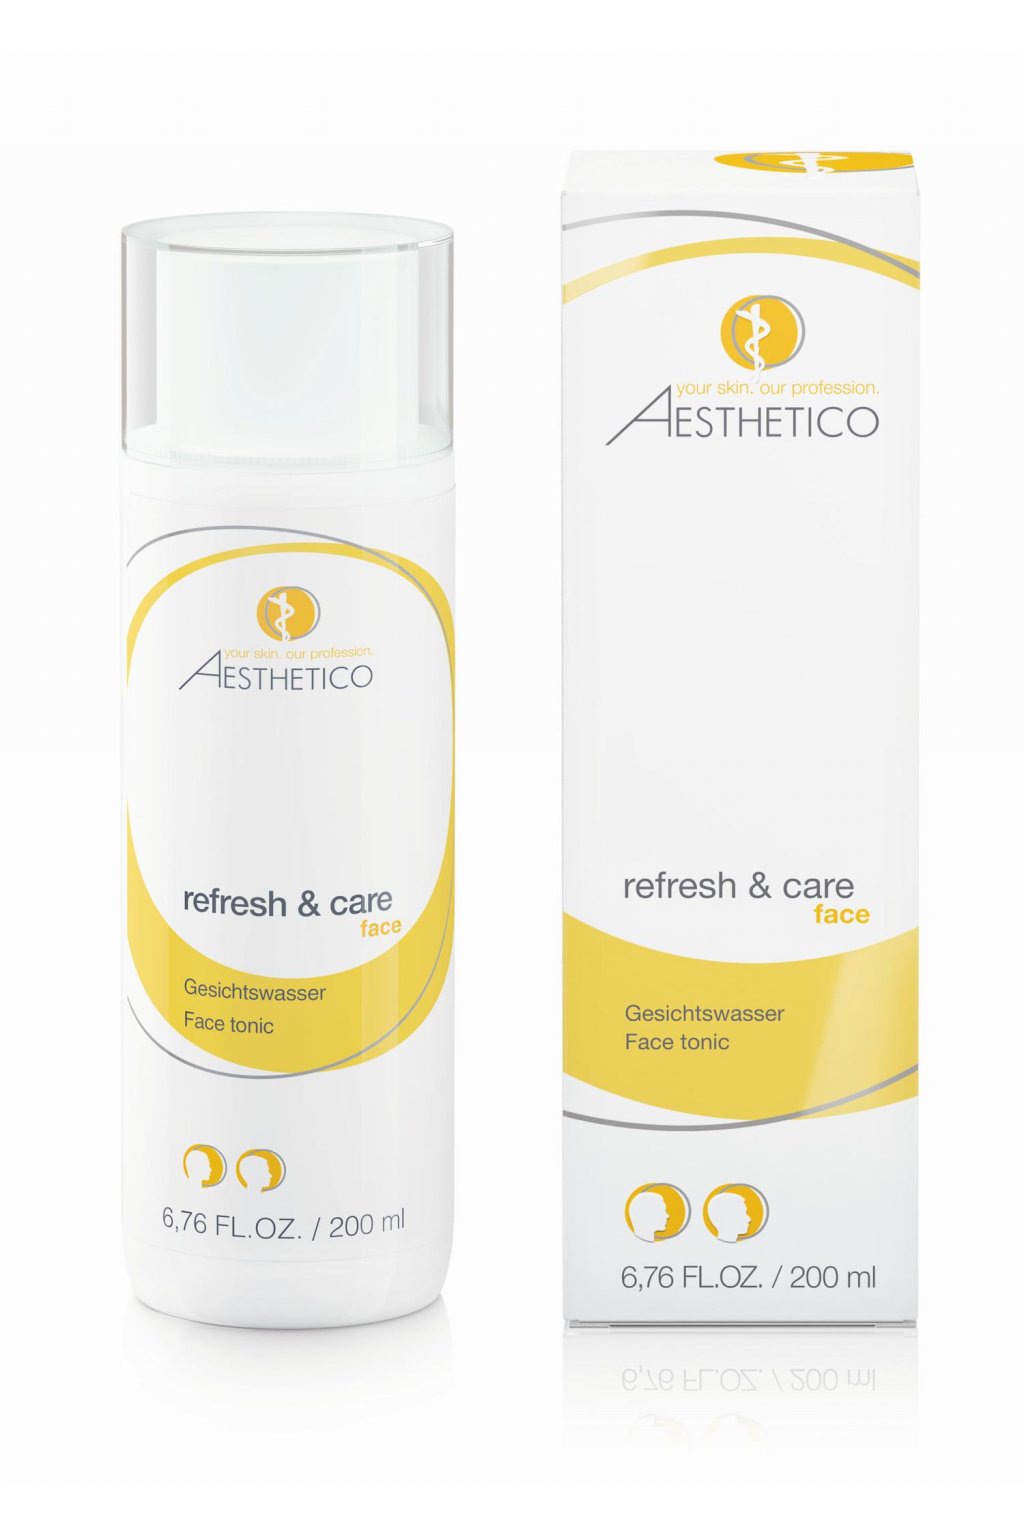 Aesthetico Refresh & Care